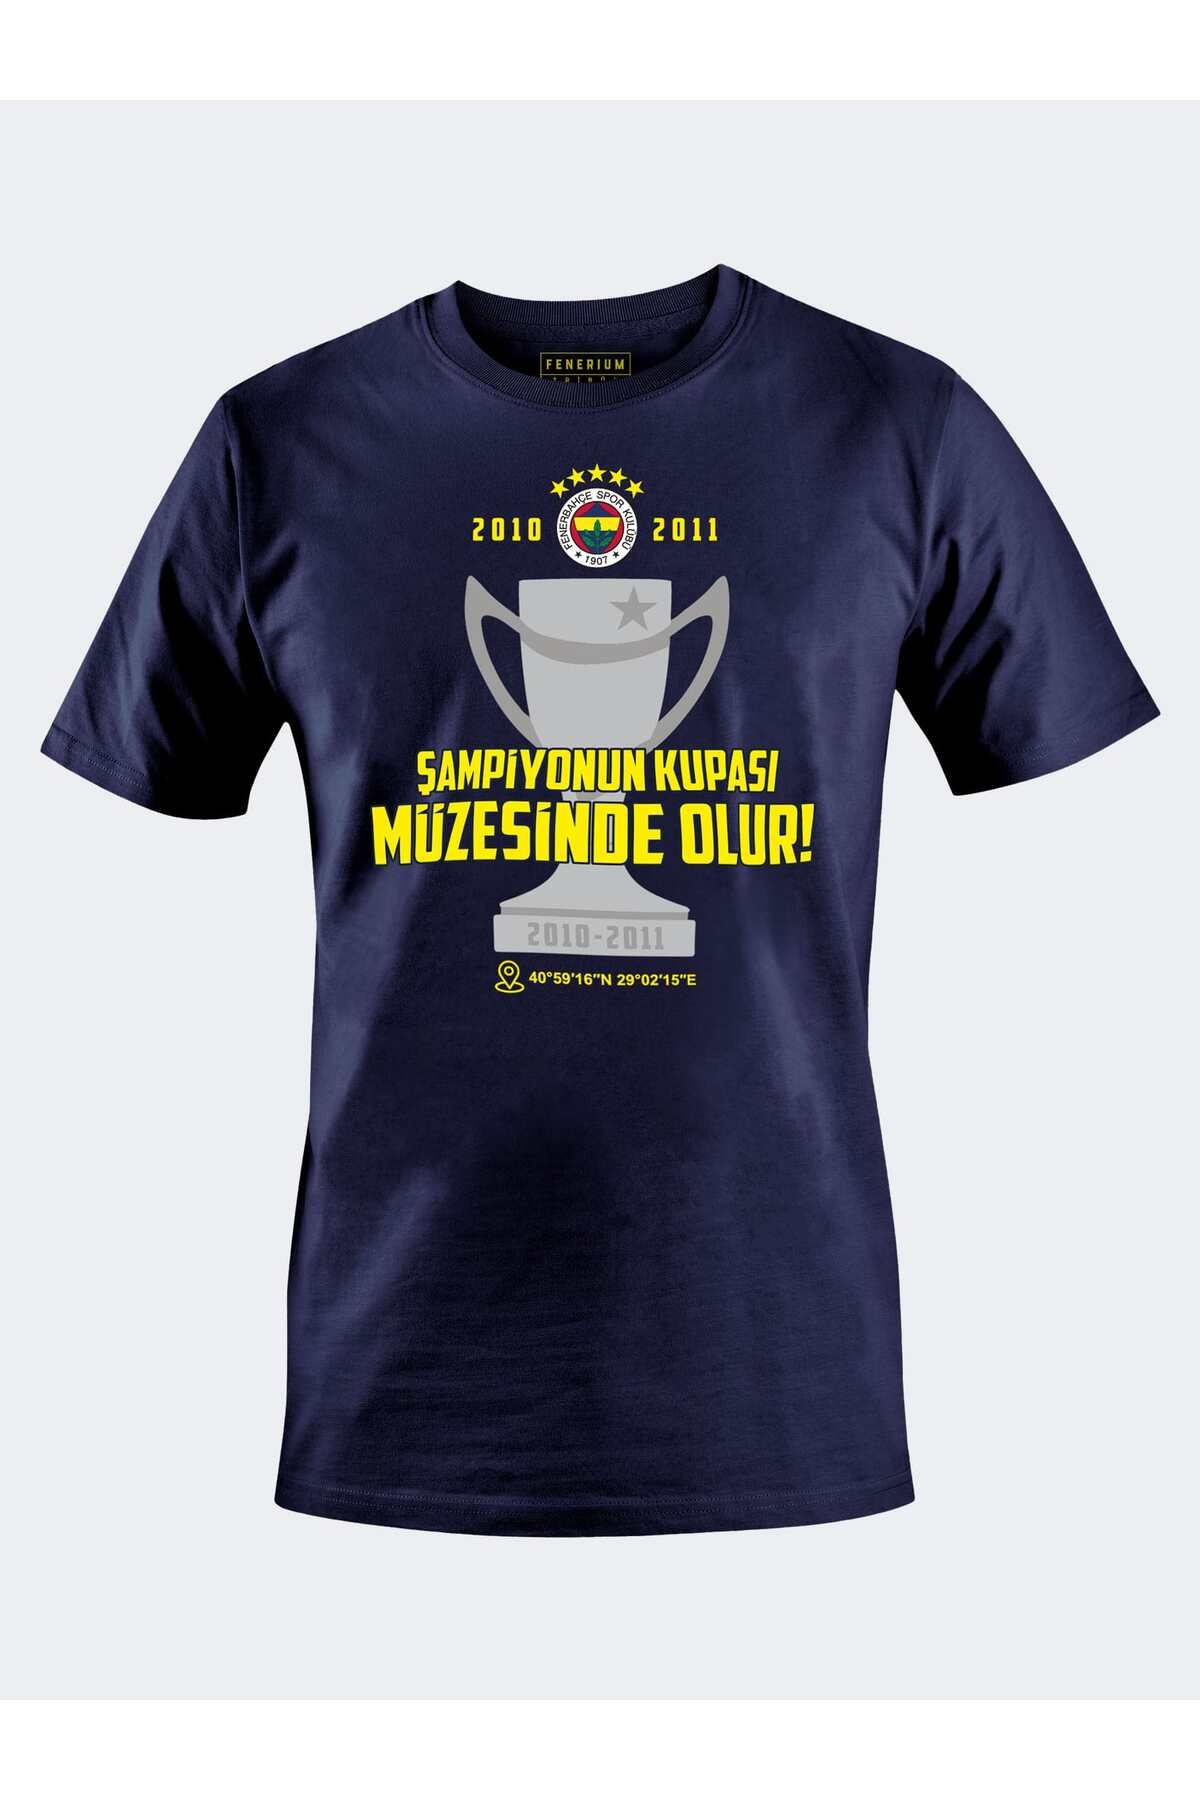 Fenerbahçe Kupa Müzede Tshırt